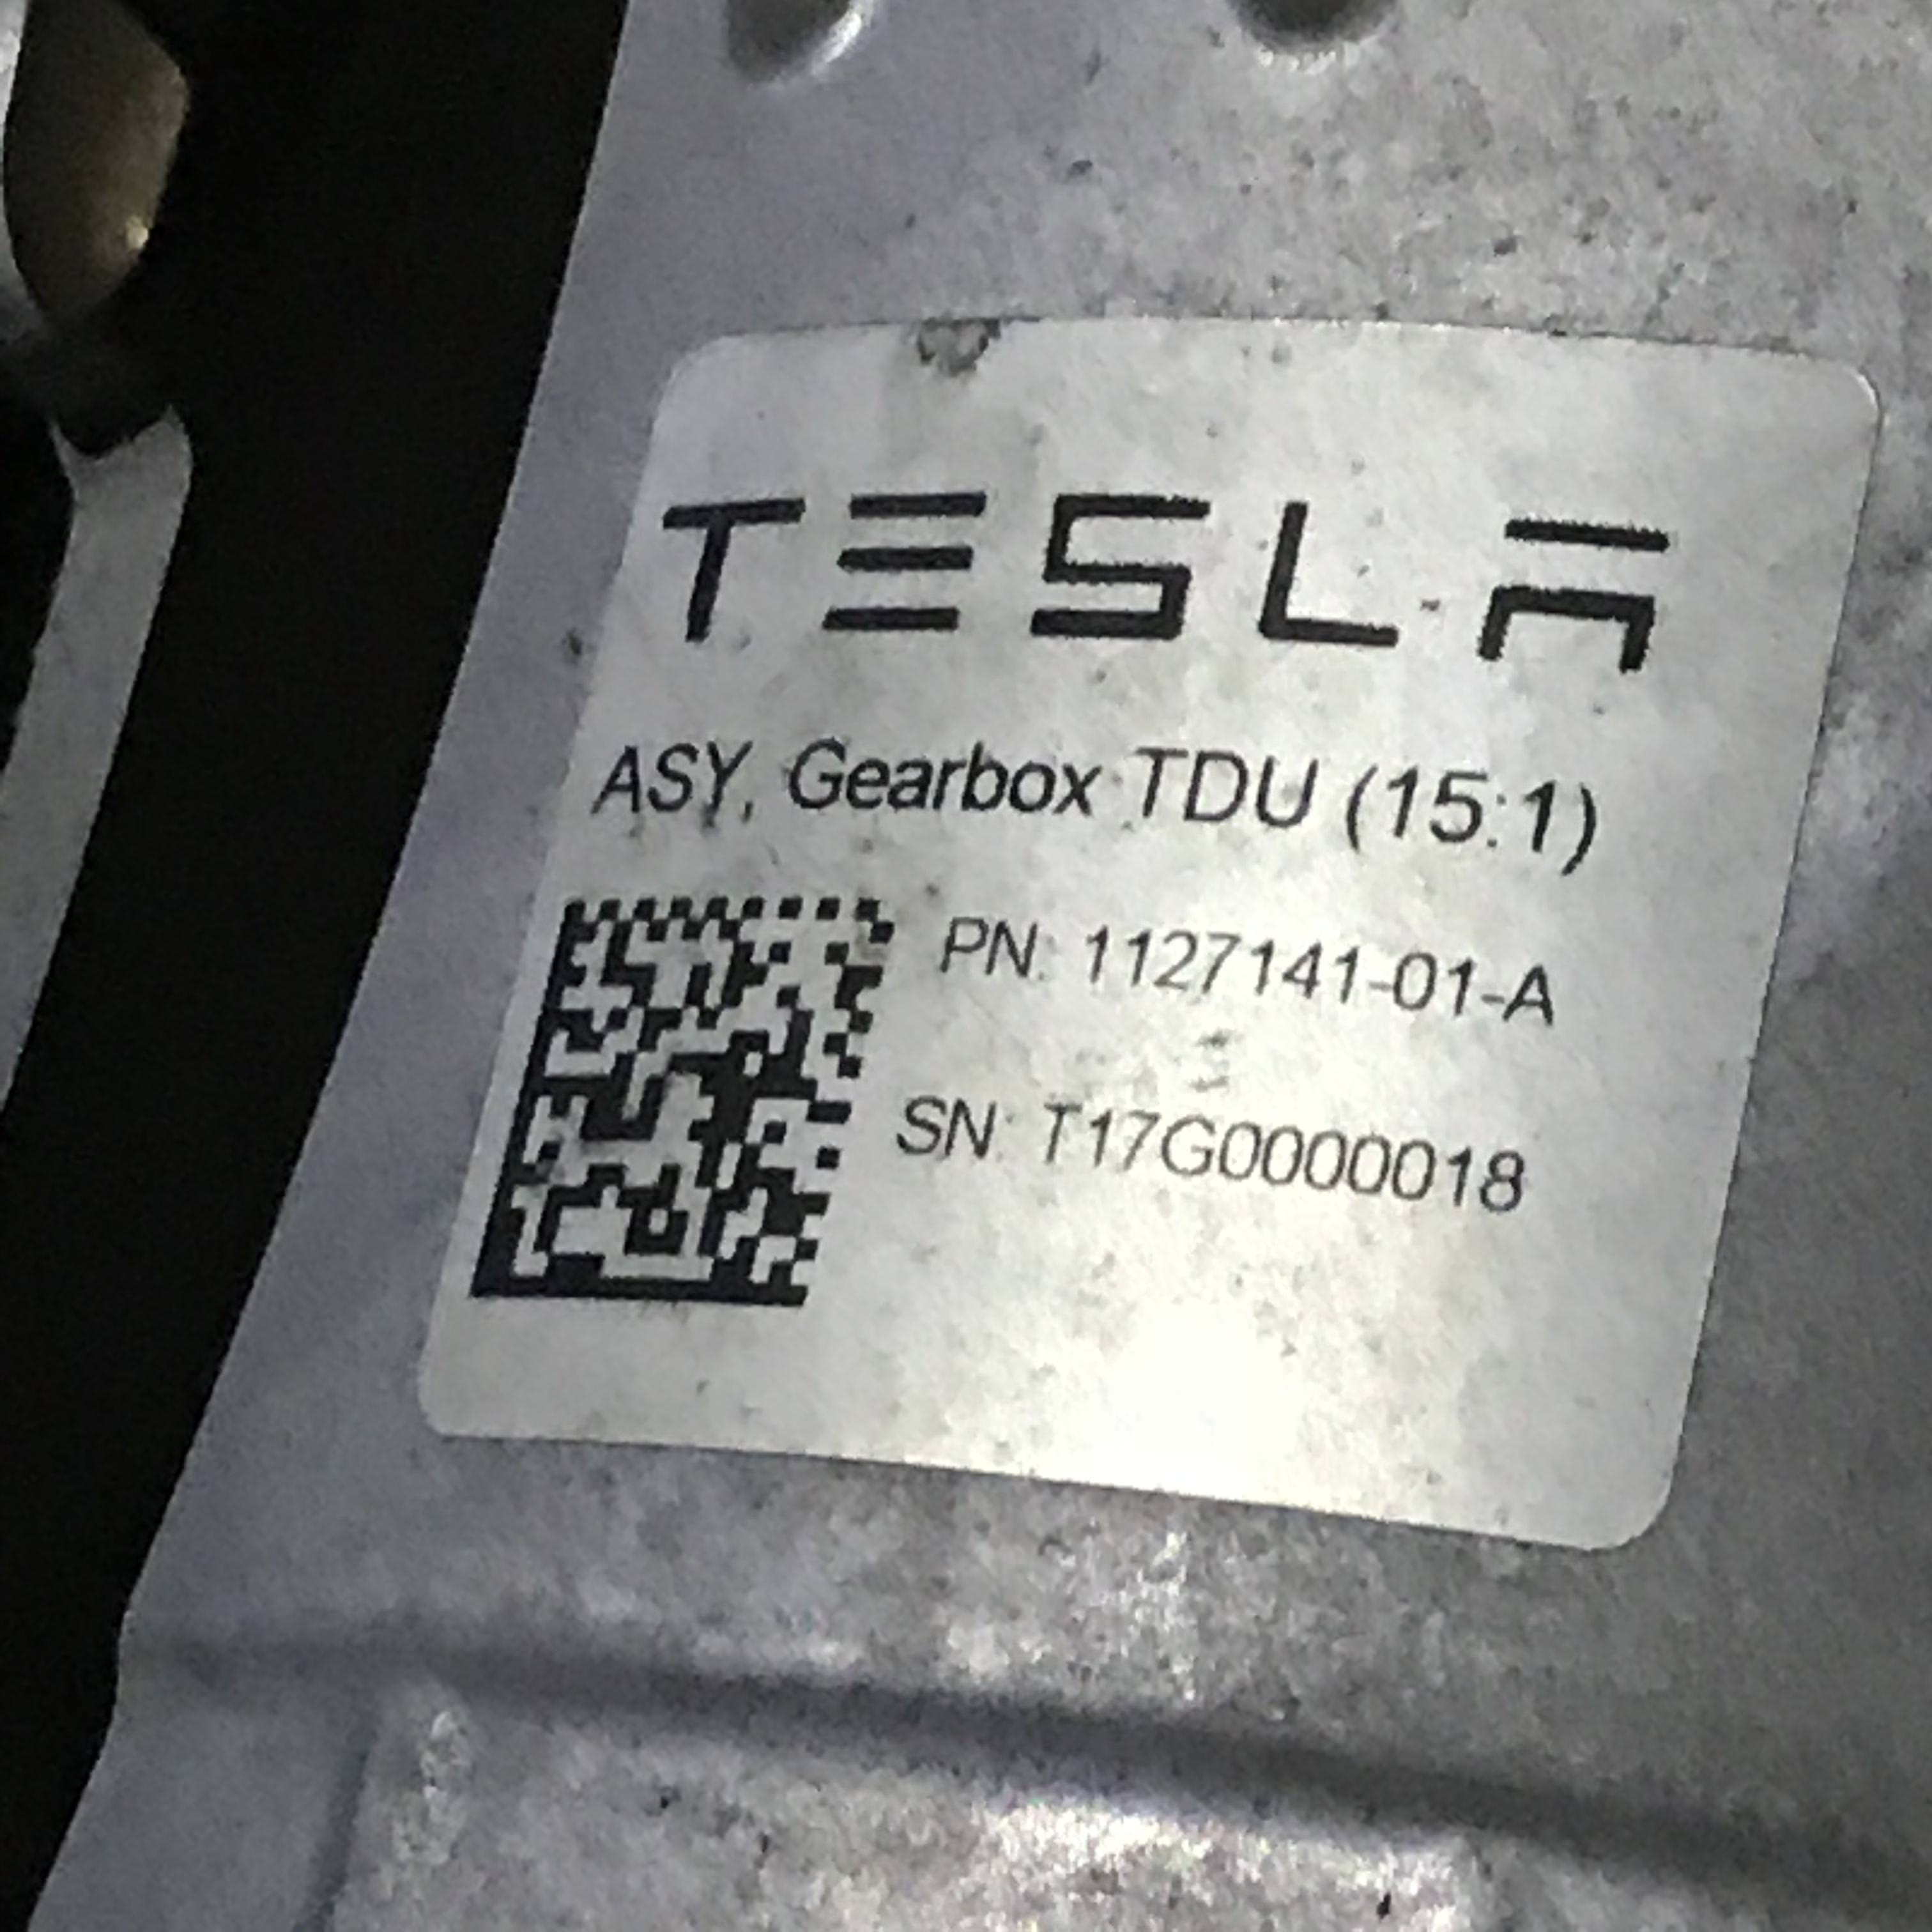 Tesla Semi PepsiCo Plano TX (8) [Credit: Ryan O’Donnell/Imugr]